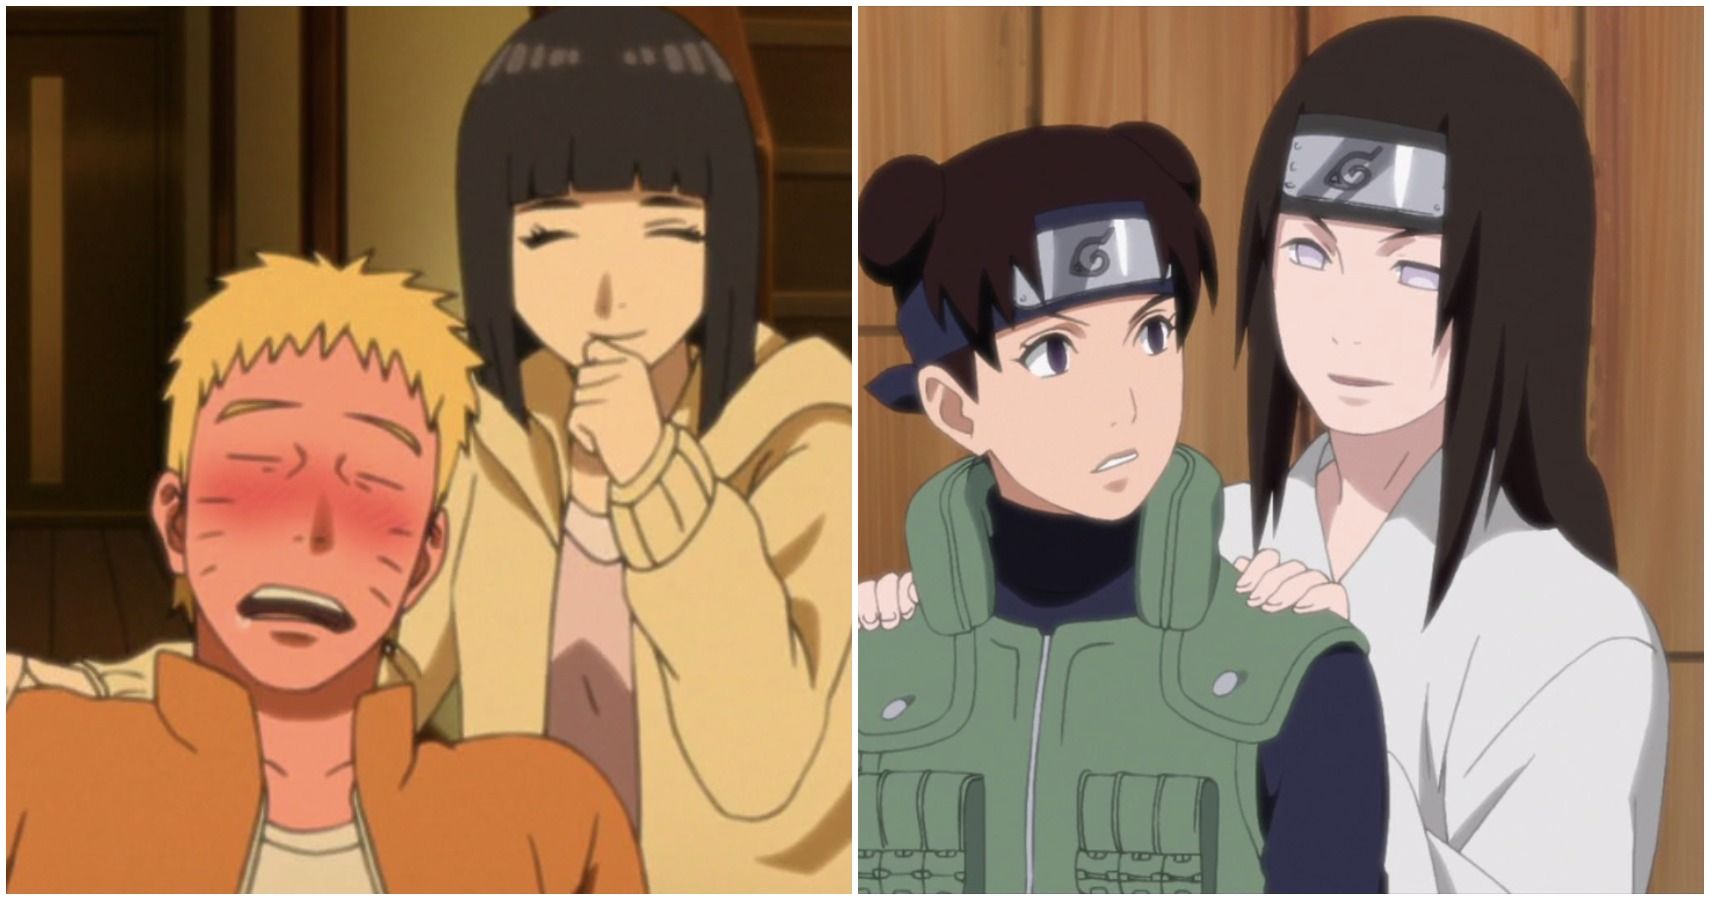 Naruto and sasuke ship cute.